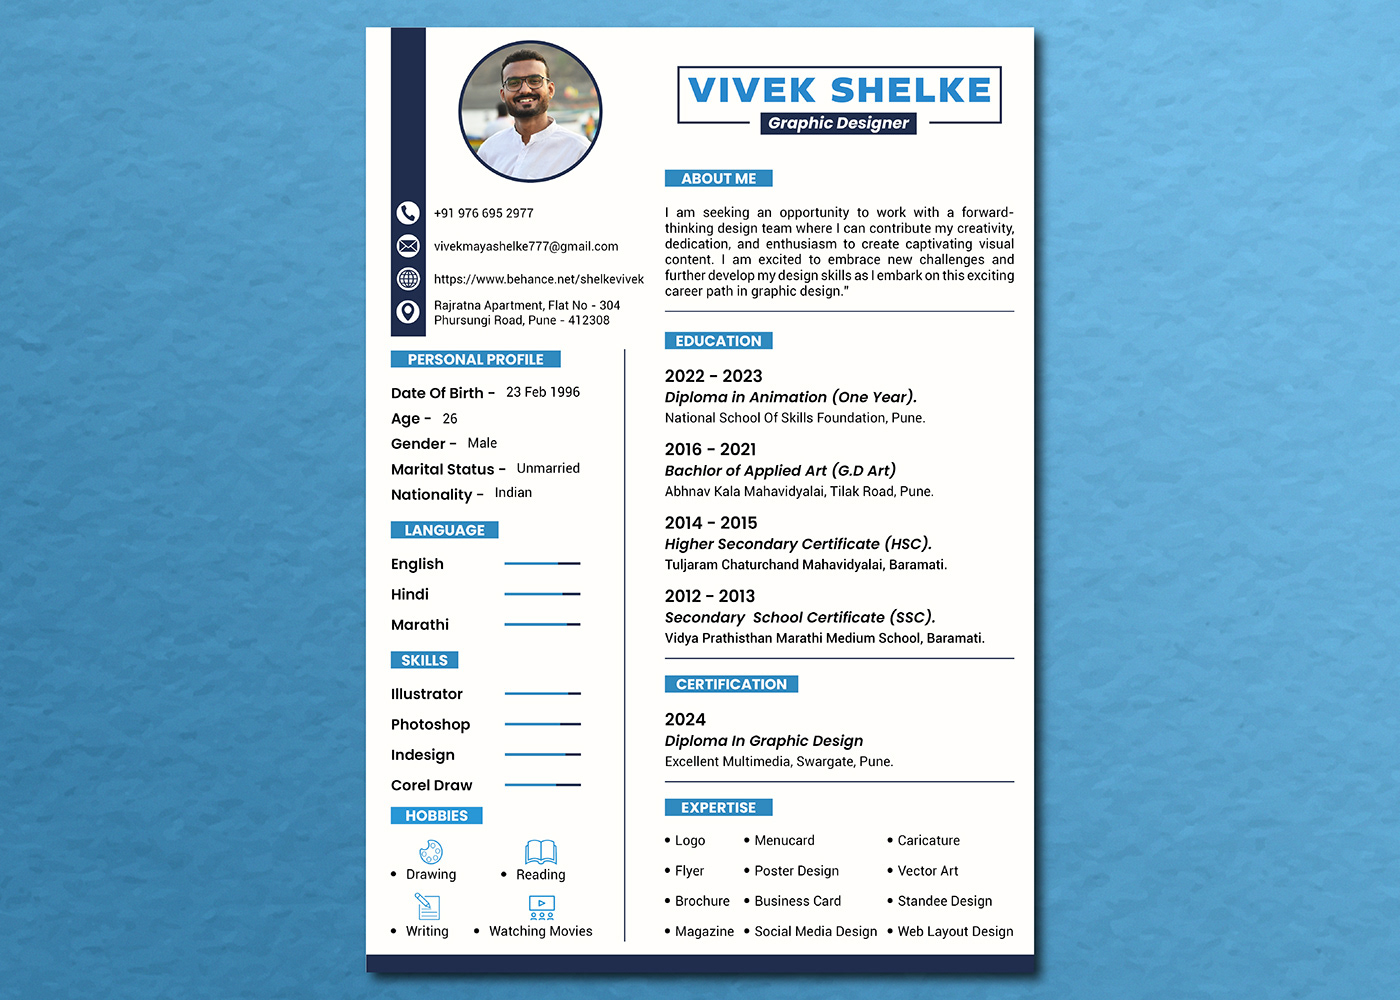 Resume resume design cv design portfolio Portfolio Design Social Media Design vector art illustration design Digital Art  brabding